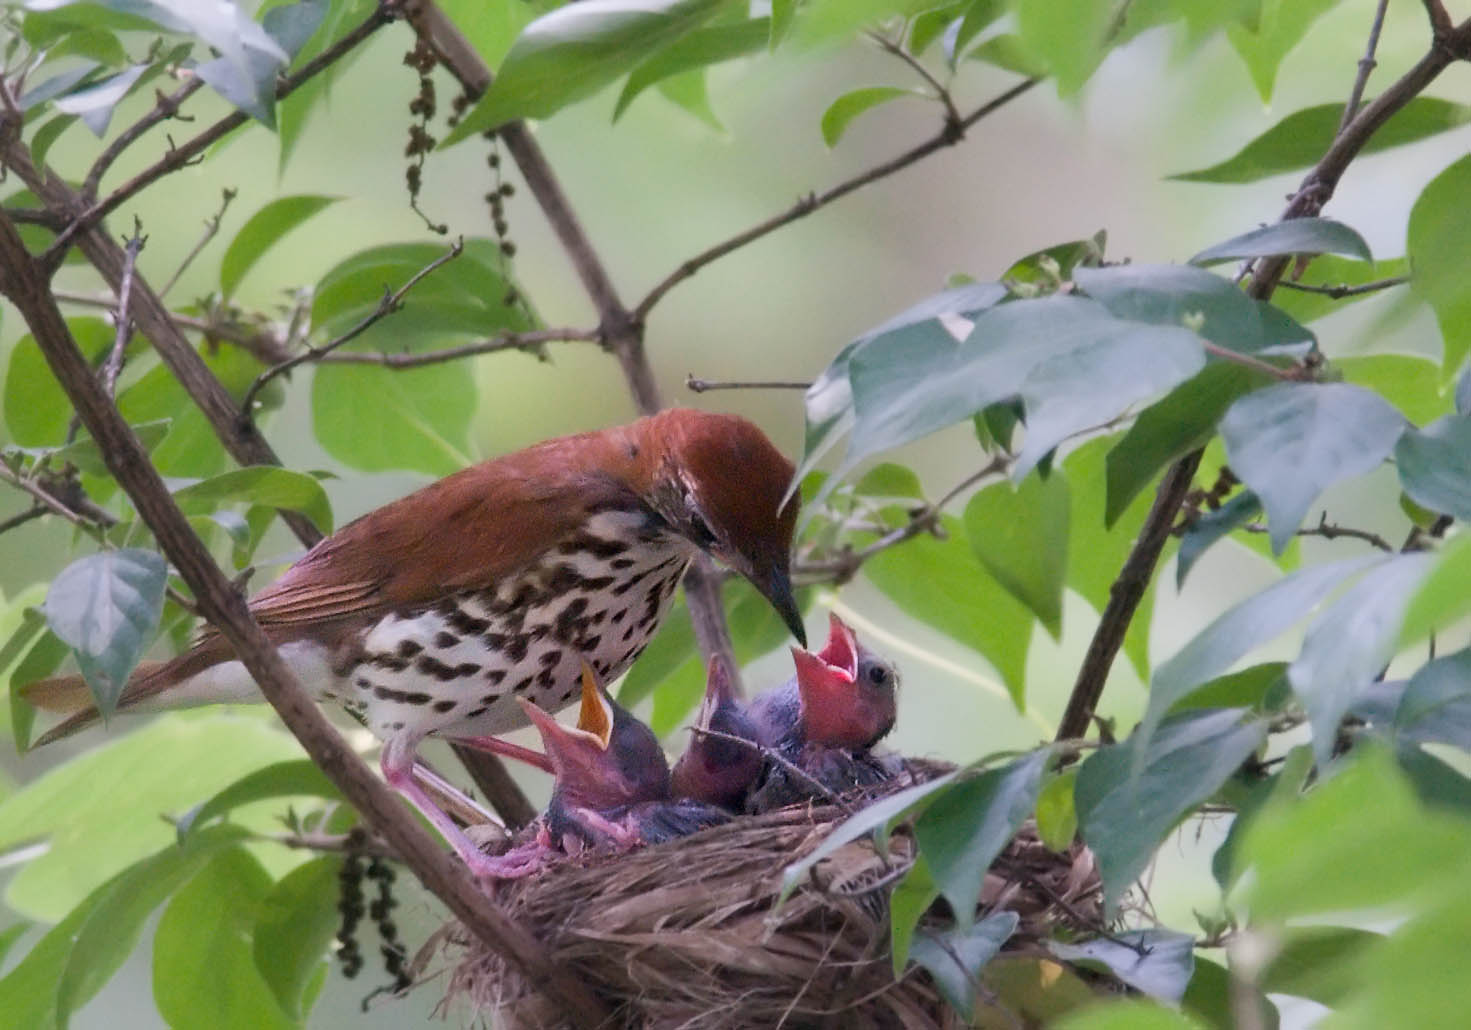 A wood thrush feeding cuckoo chicks parasitizing its nest